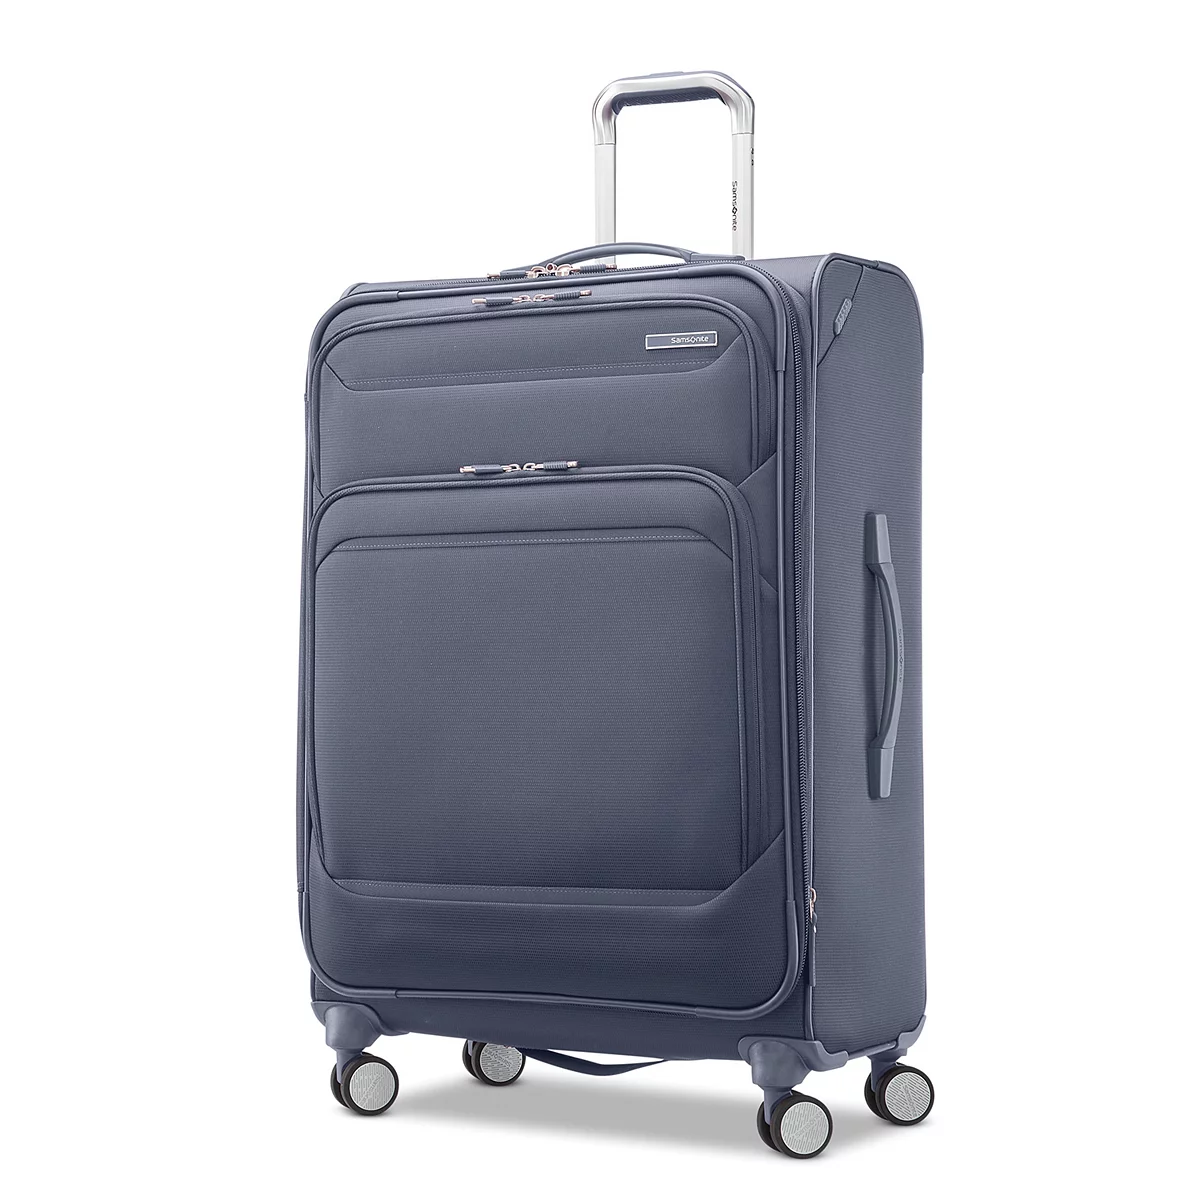 Samsonite LiteLift 3.0 Softside Spinner Luggage (MEDIUM)